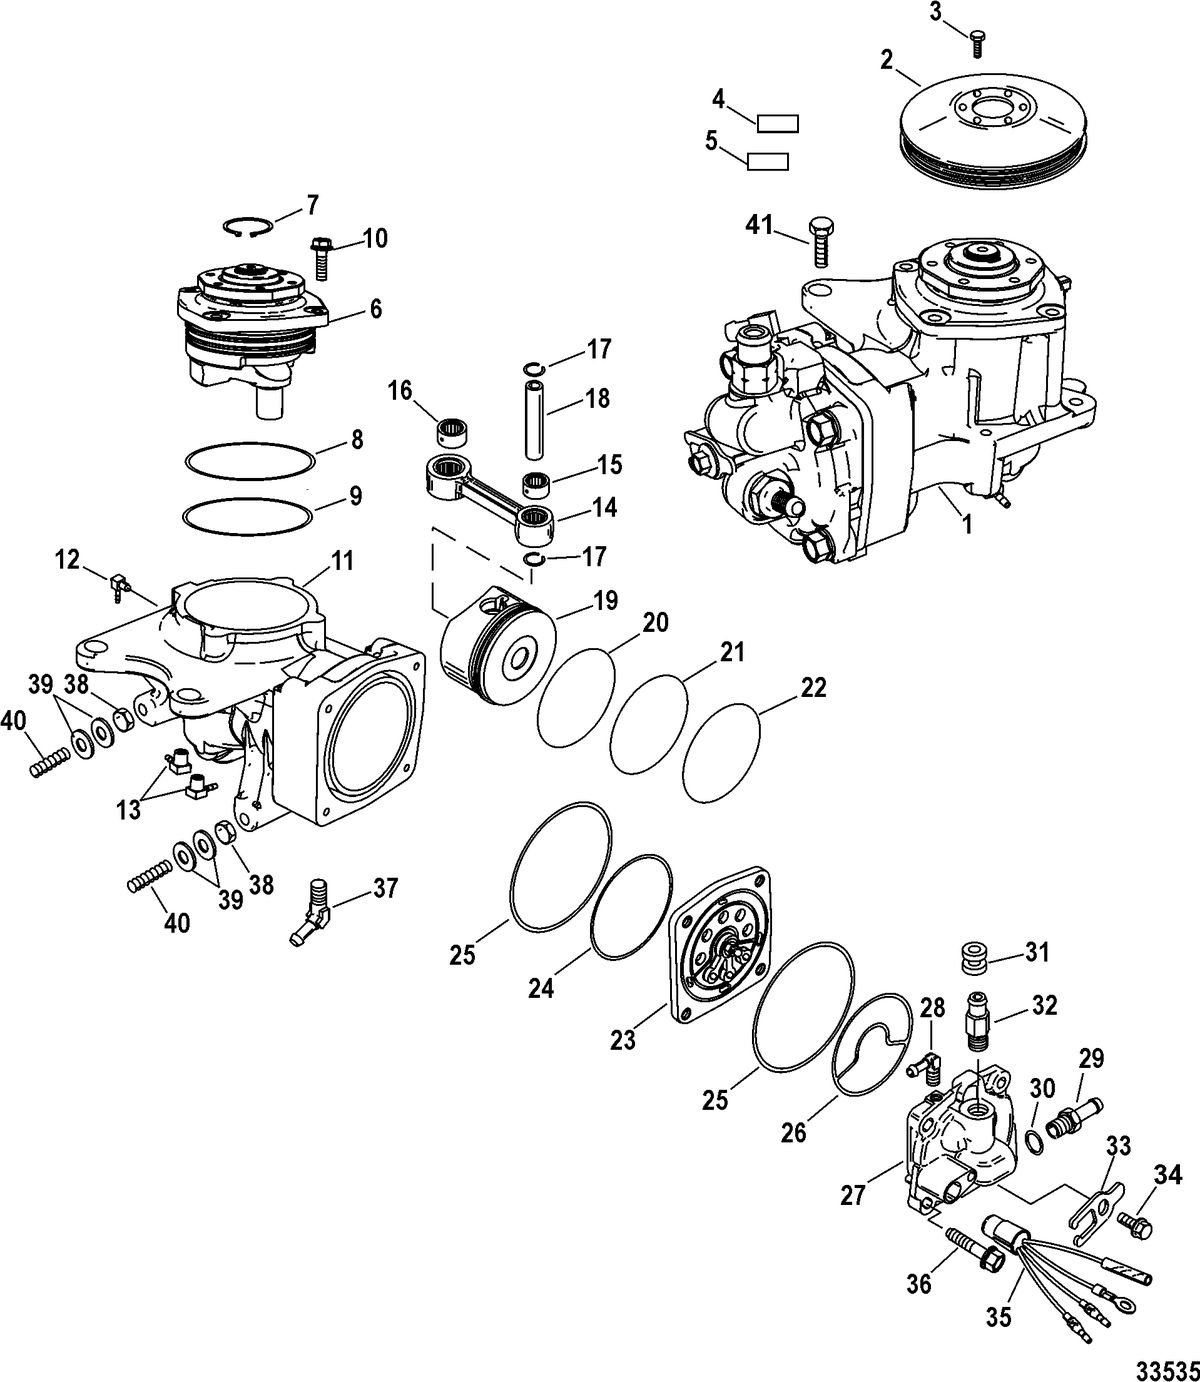 SPORTJET 200 DFI M2 JET DRIVE Air Compressor Components(Design III)